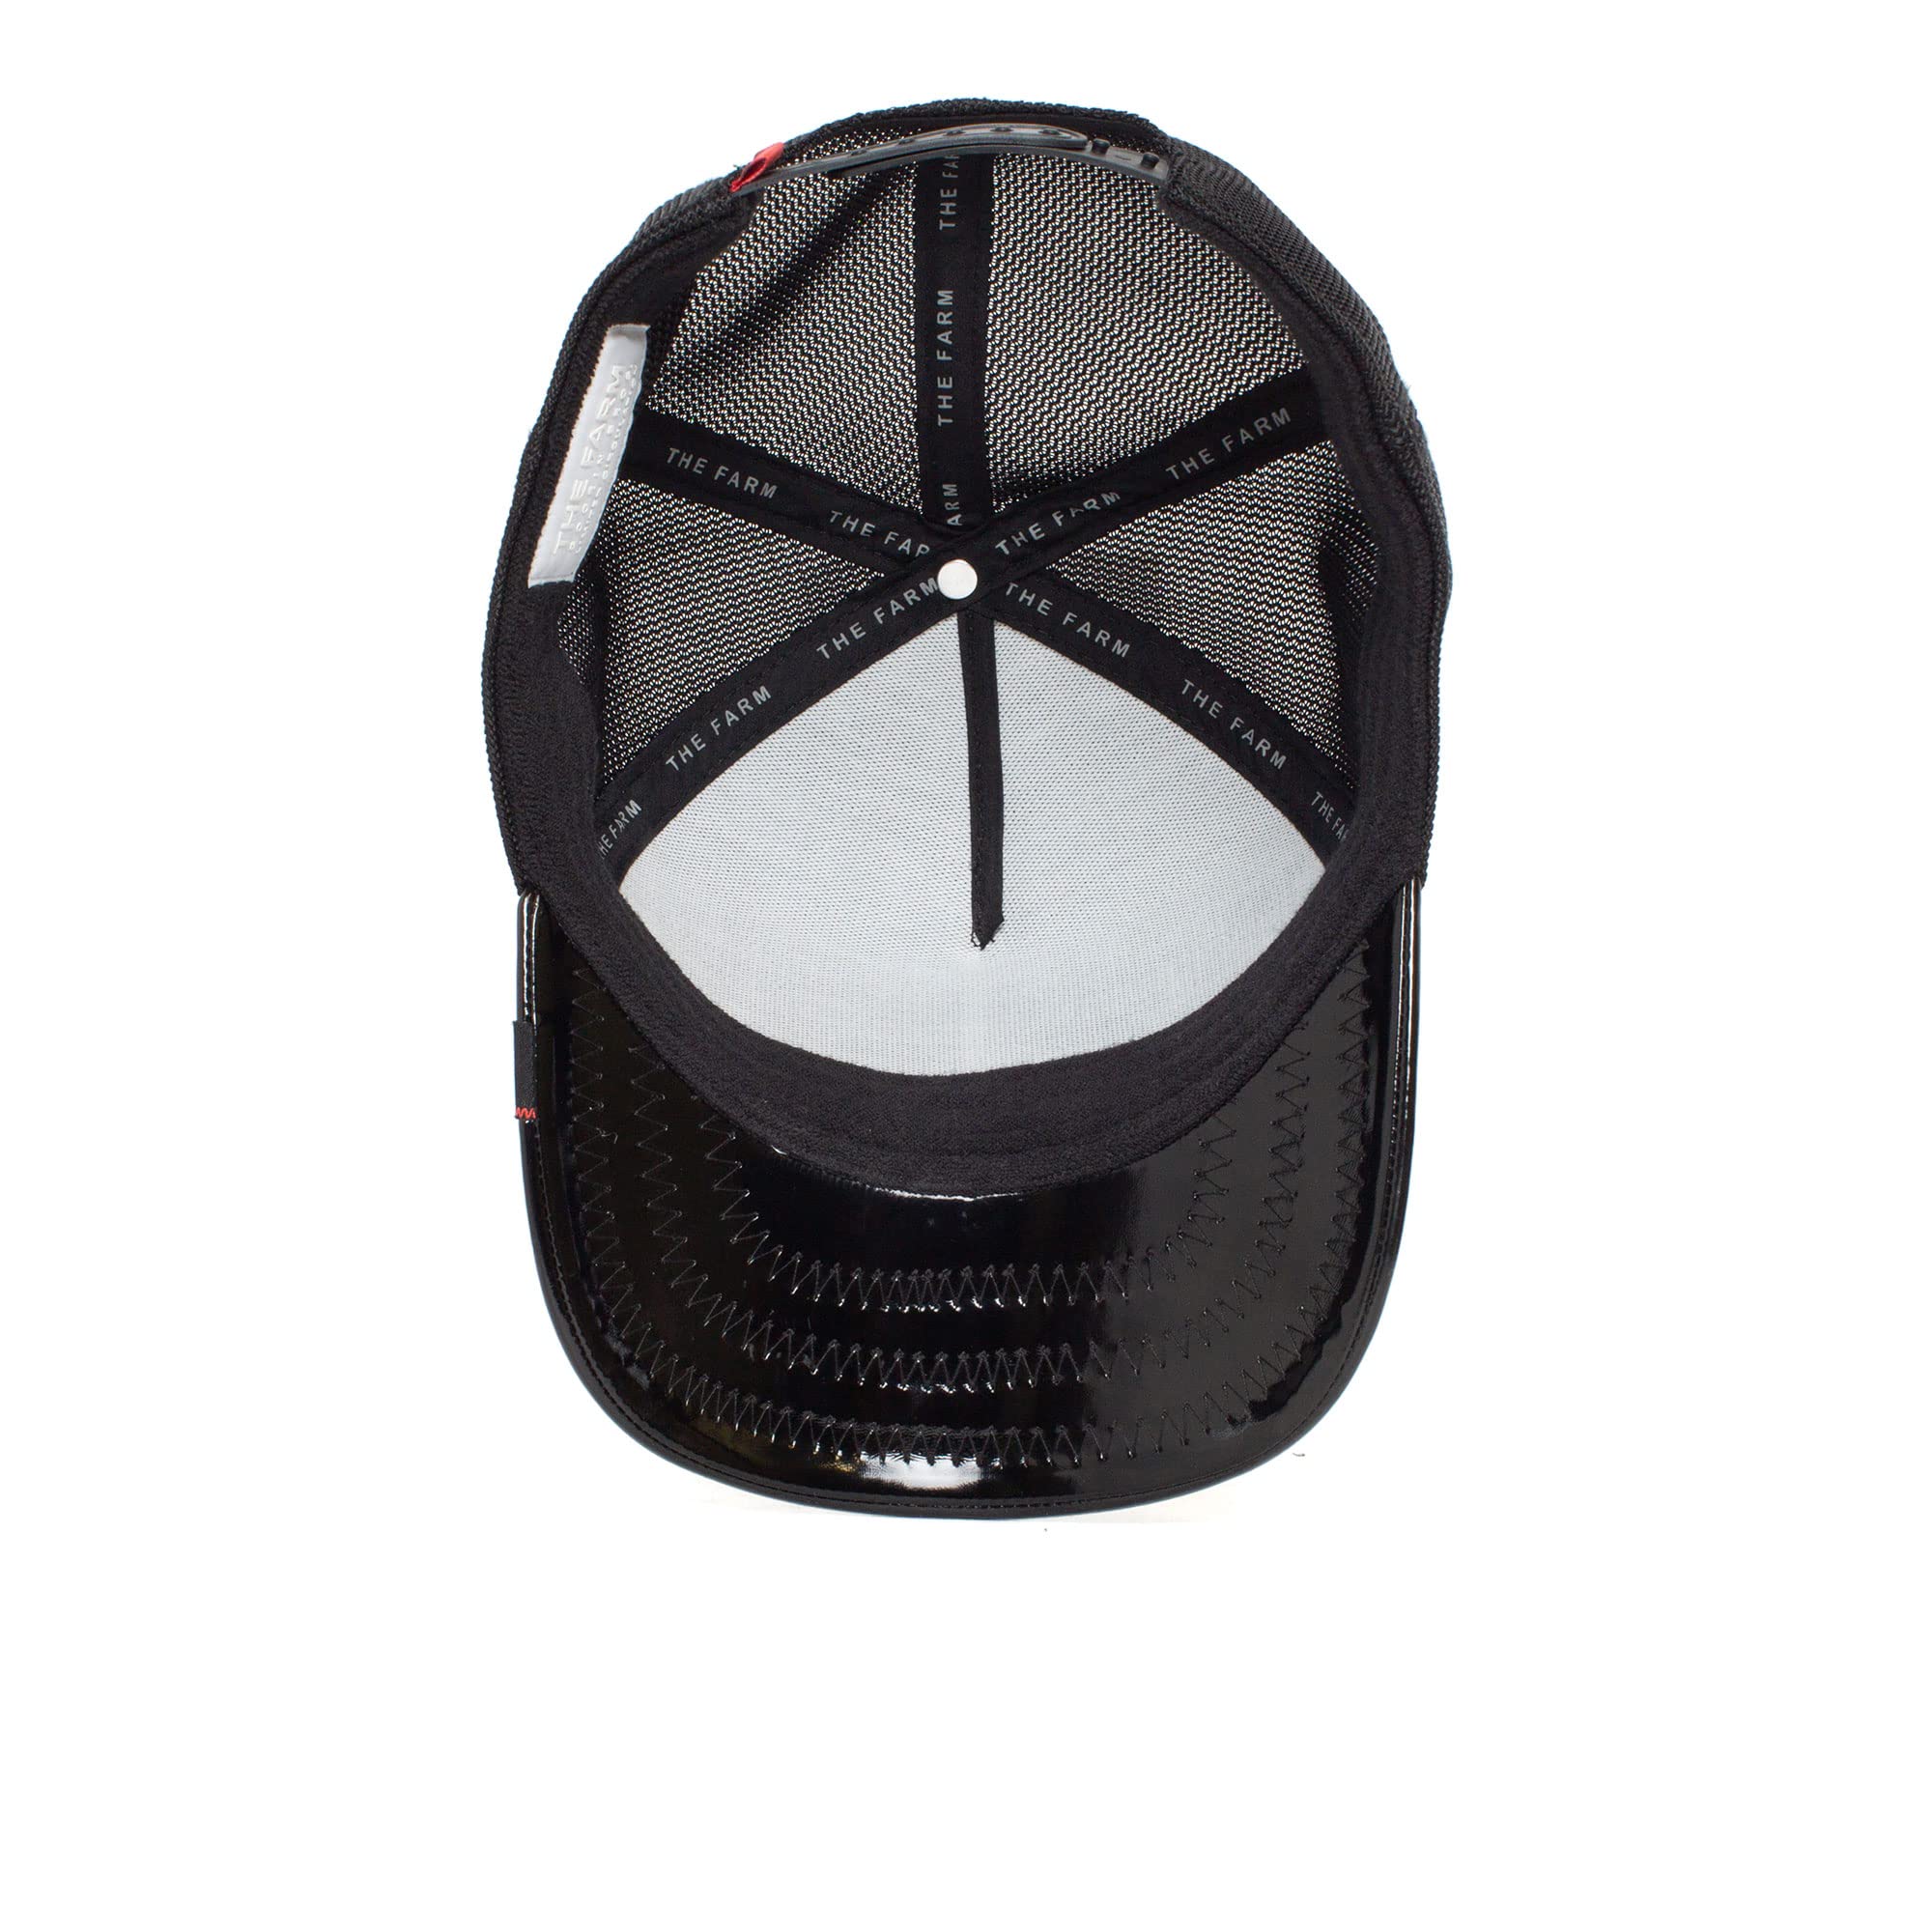 Goorin Bros. The Farm Unisex High Shine Faux Leather Adjustable Snapback Trucker Hat, Big Black, One Size - Caps Fitted Caps Fitted Goorin Bros.